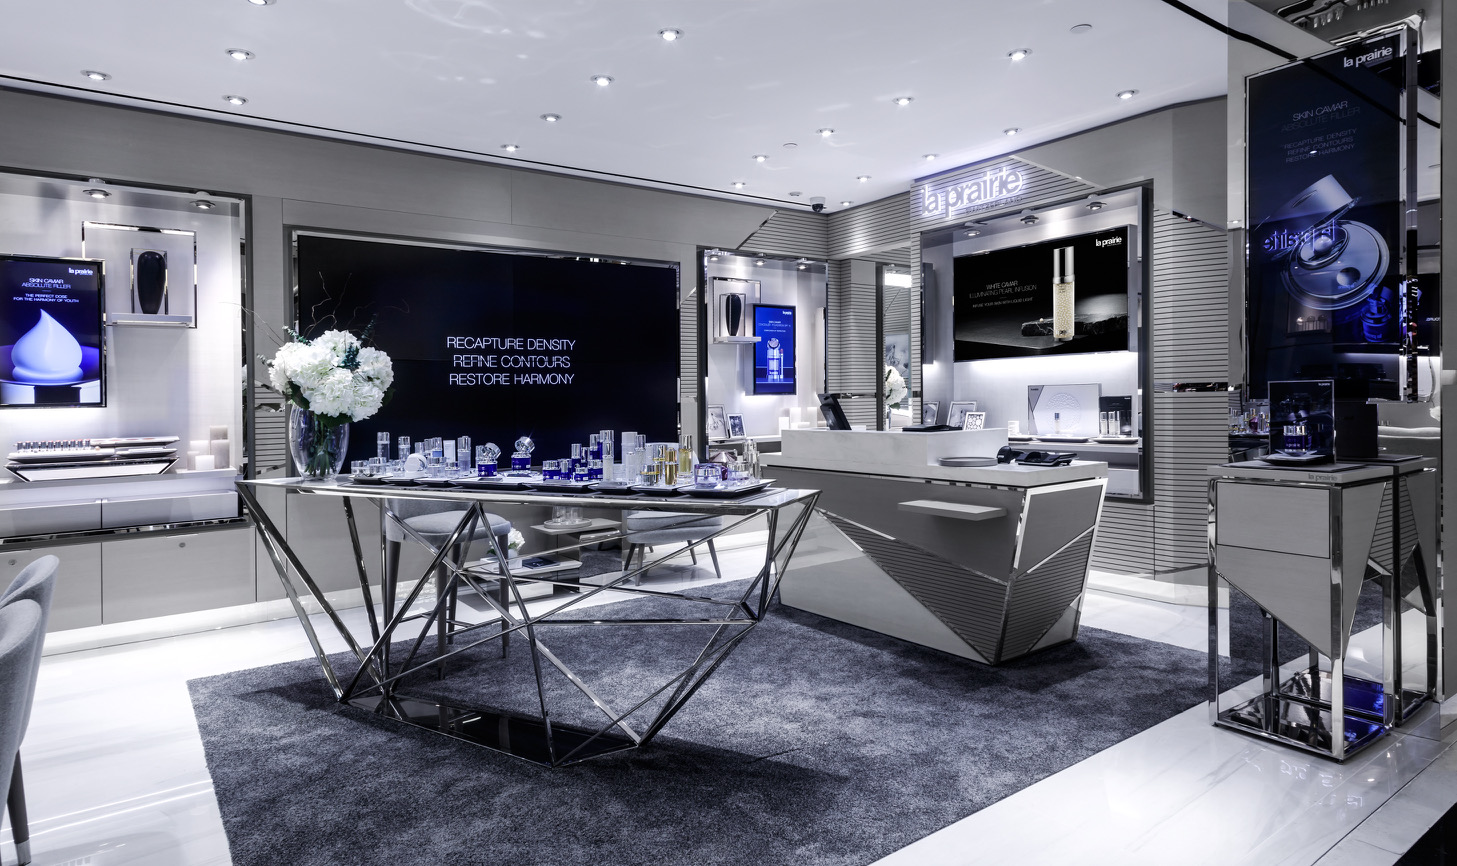 La Prairie Debuts New Global Store Design at Bloomingdale's 59th Street